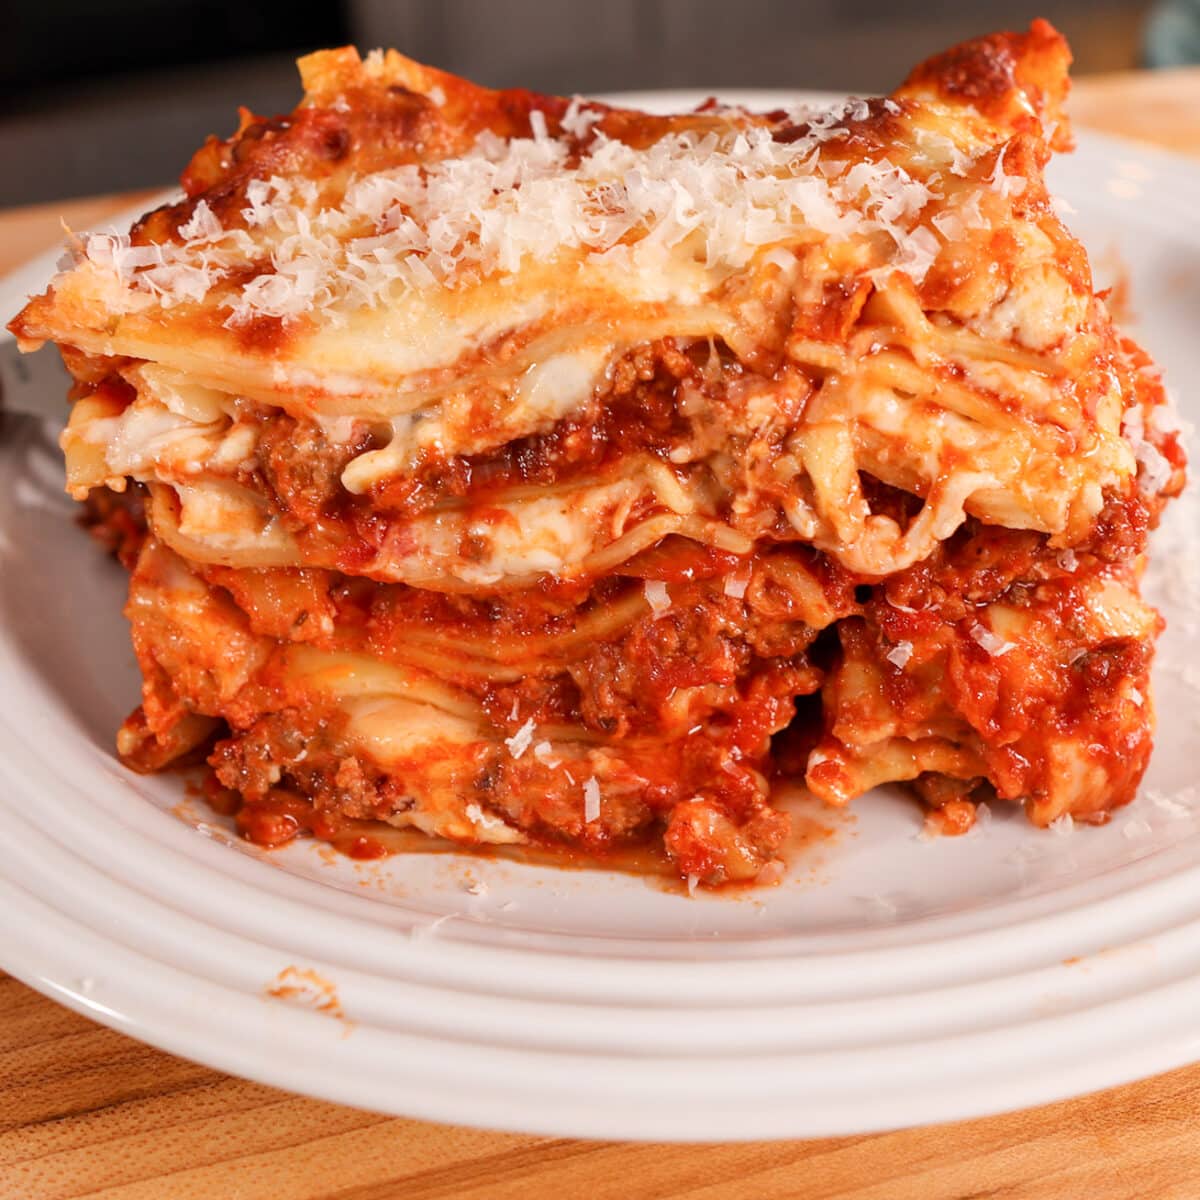 lasagna on a plate